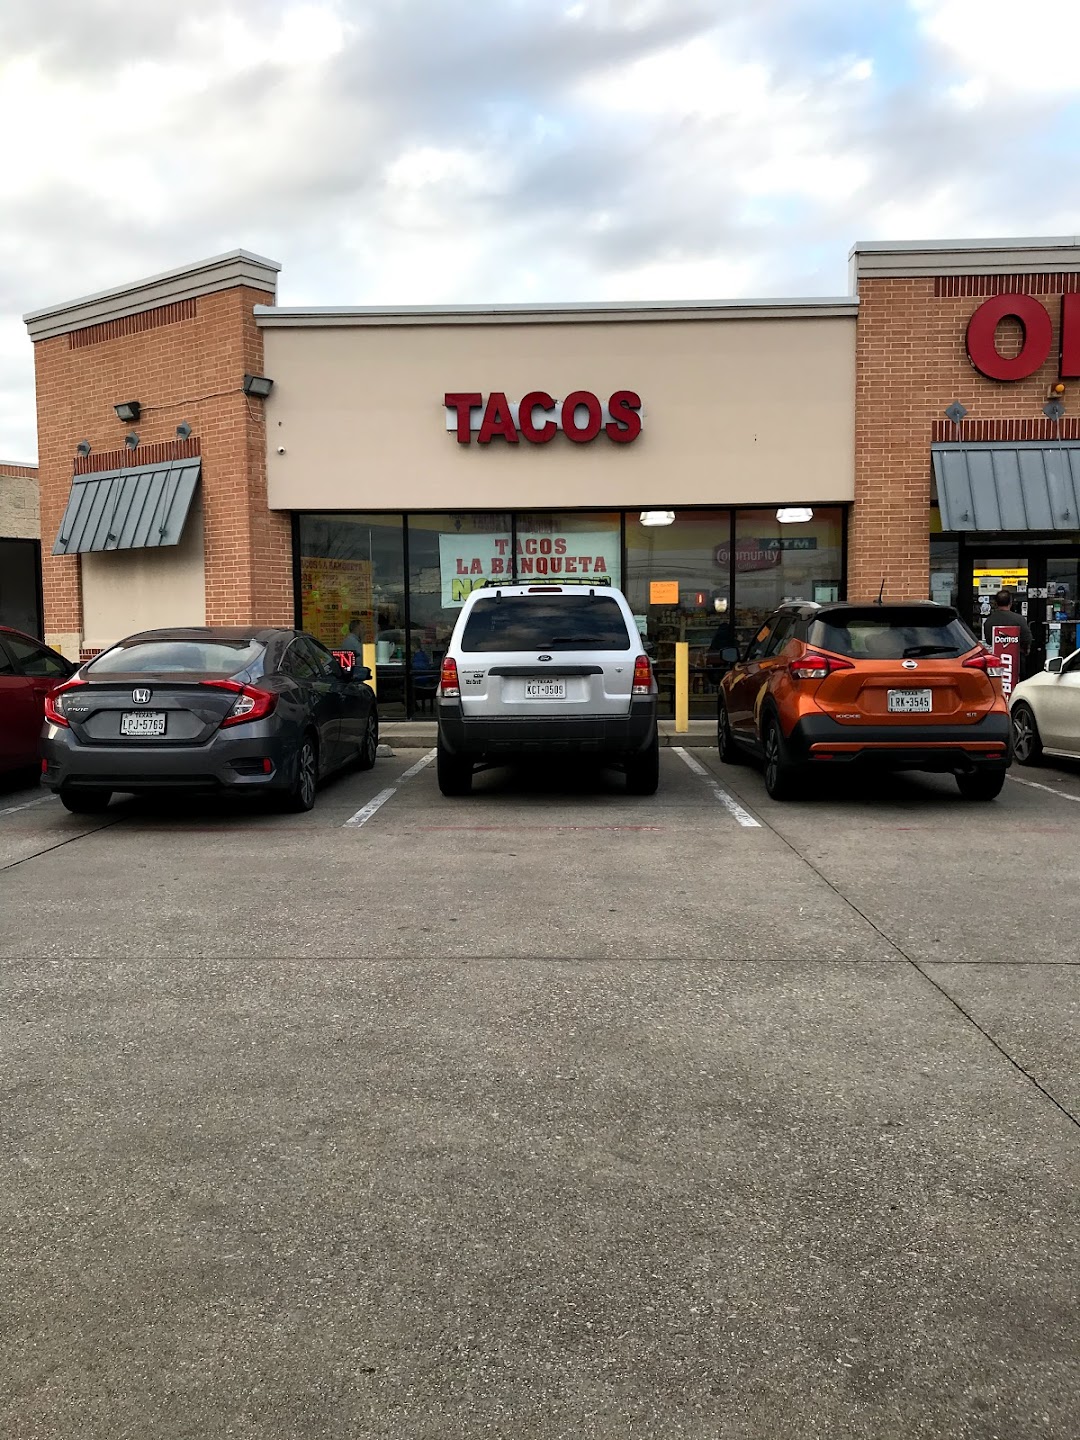 Tacos La Banqueta